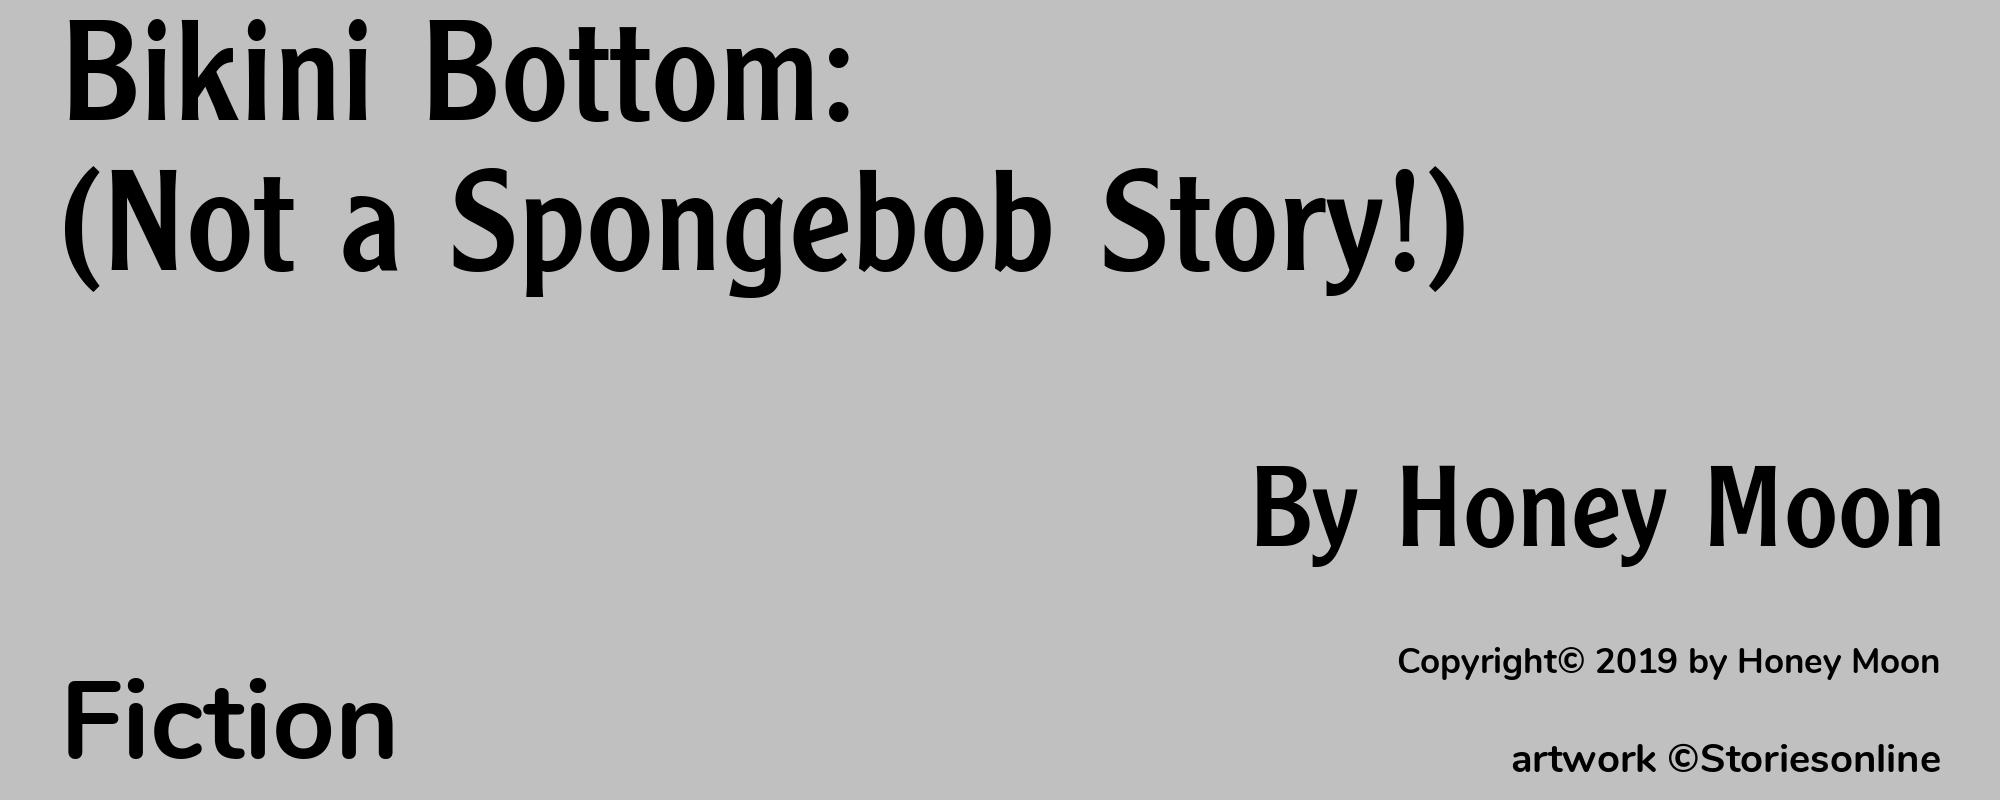 Bikini Bottom: (Not a Spongebob Story!) - Cover